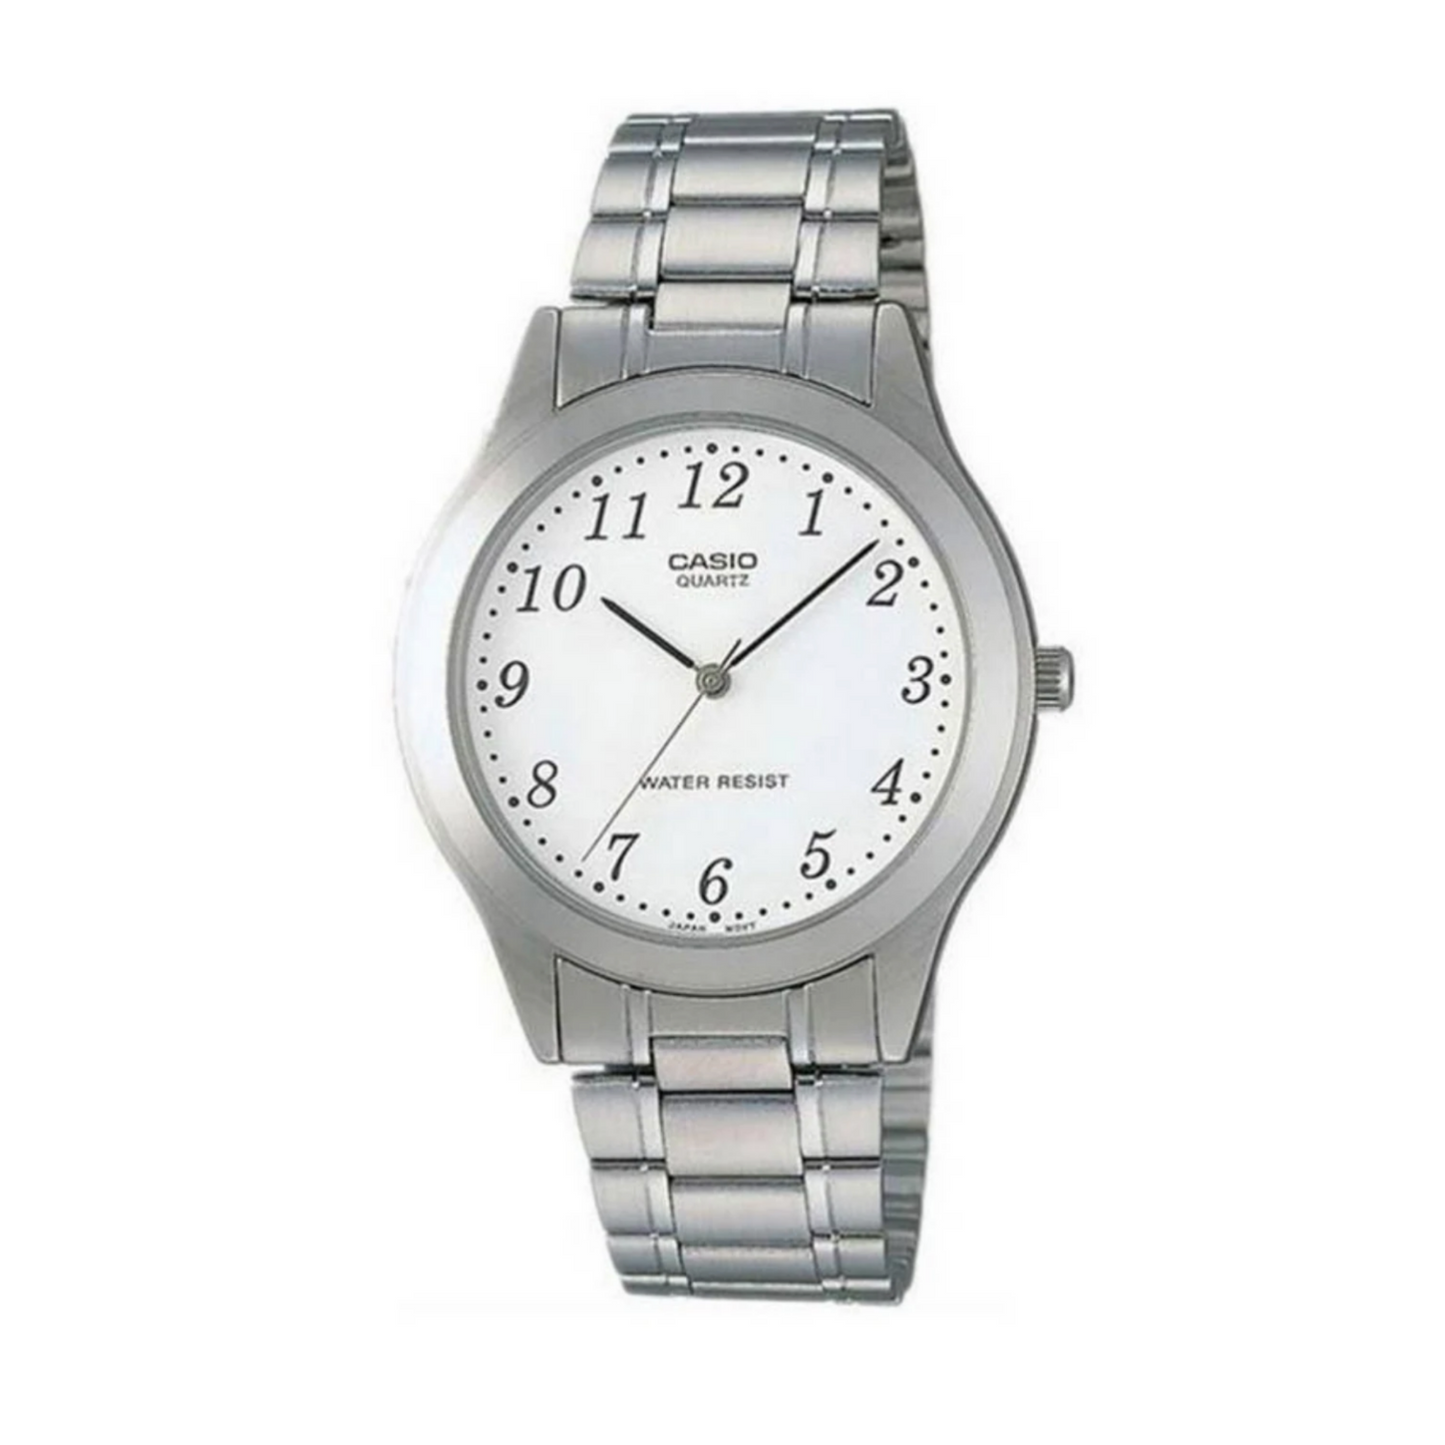 Reloj Casio mujer Modelo LTP-1128A-7B